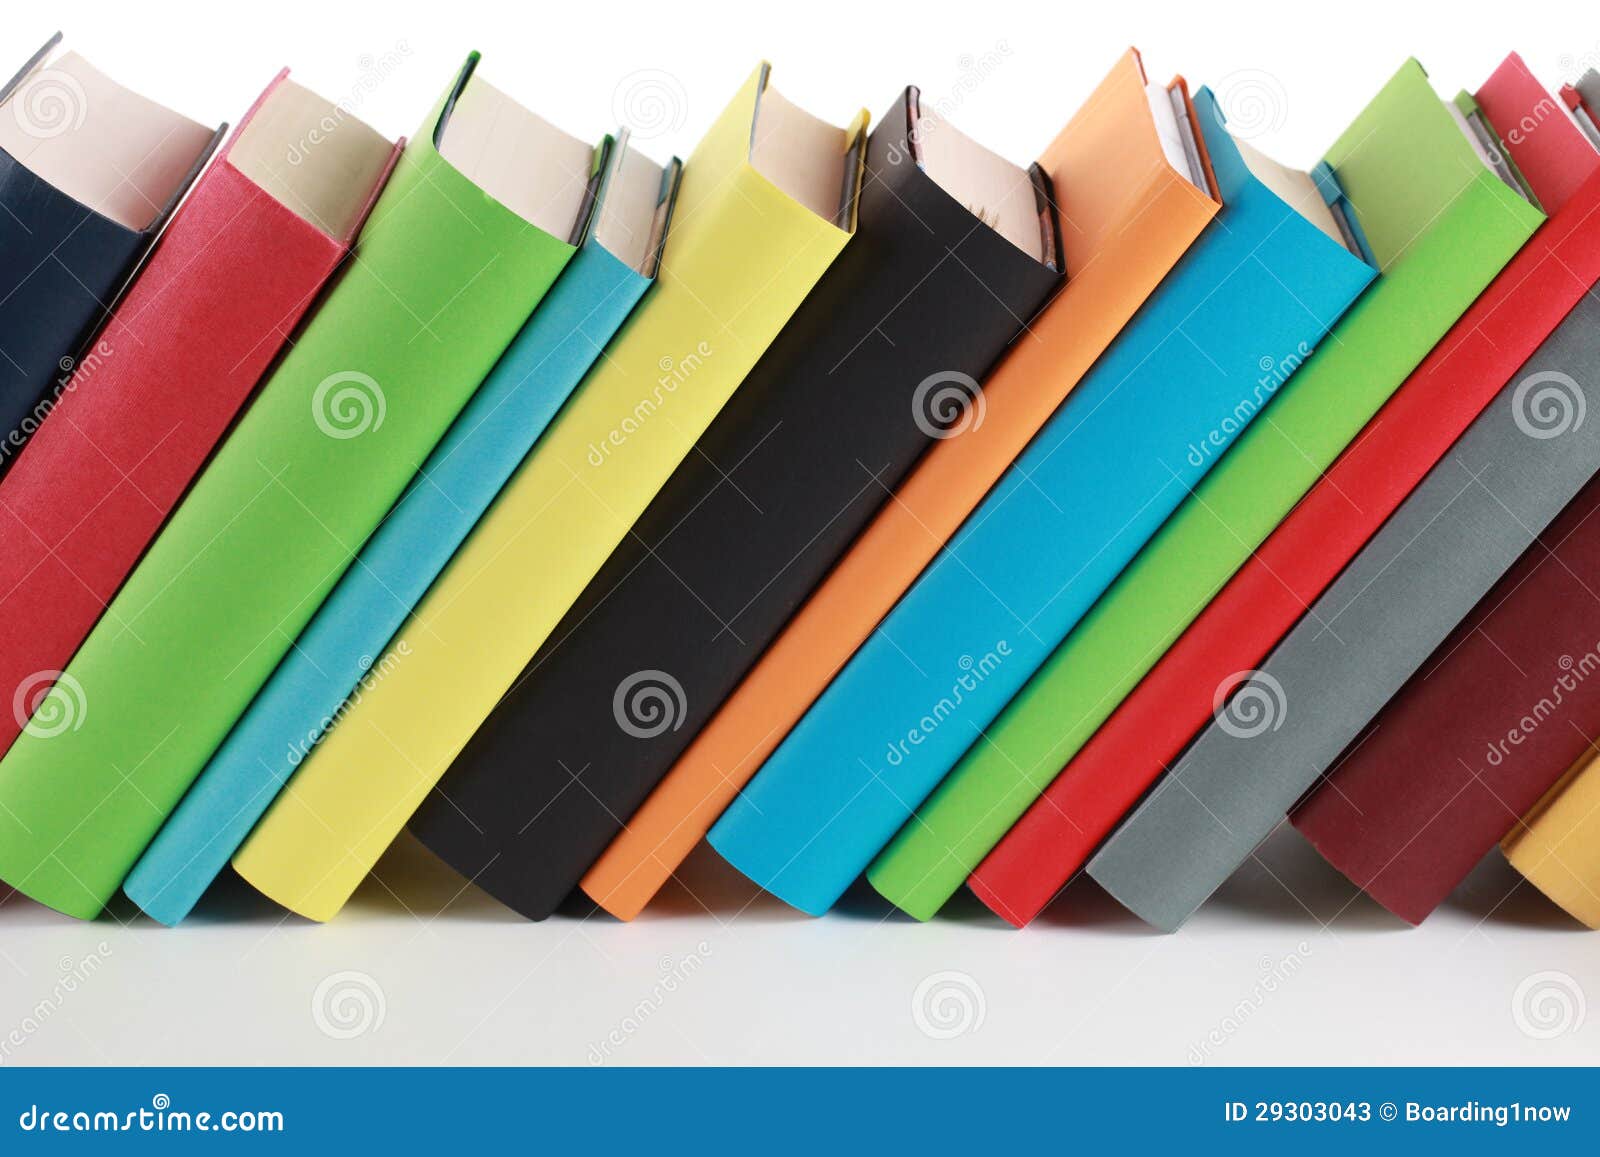 colorful books